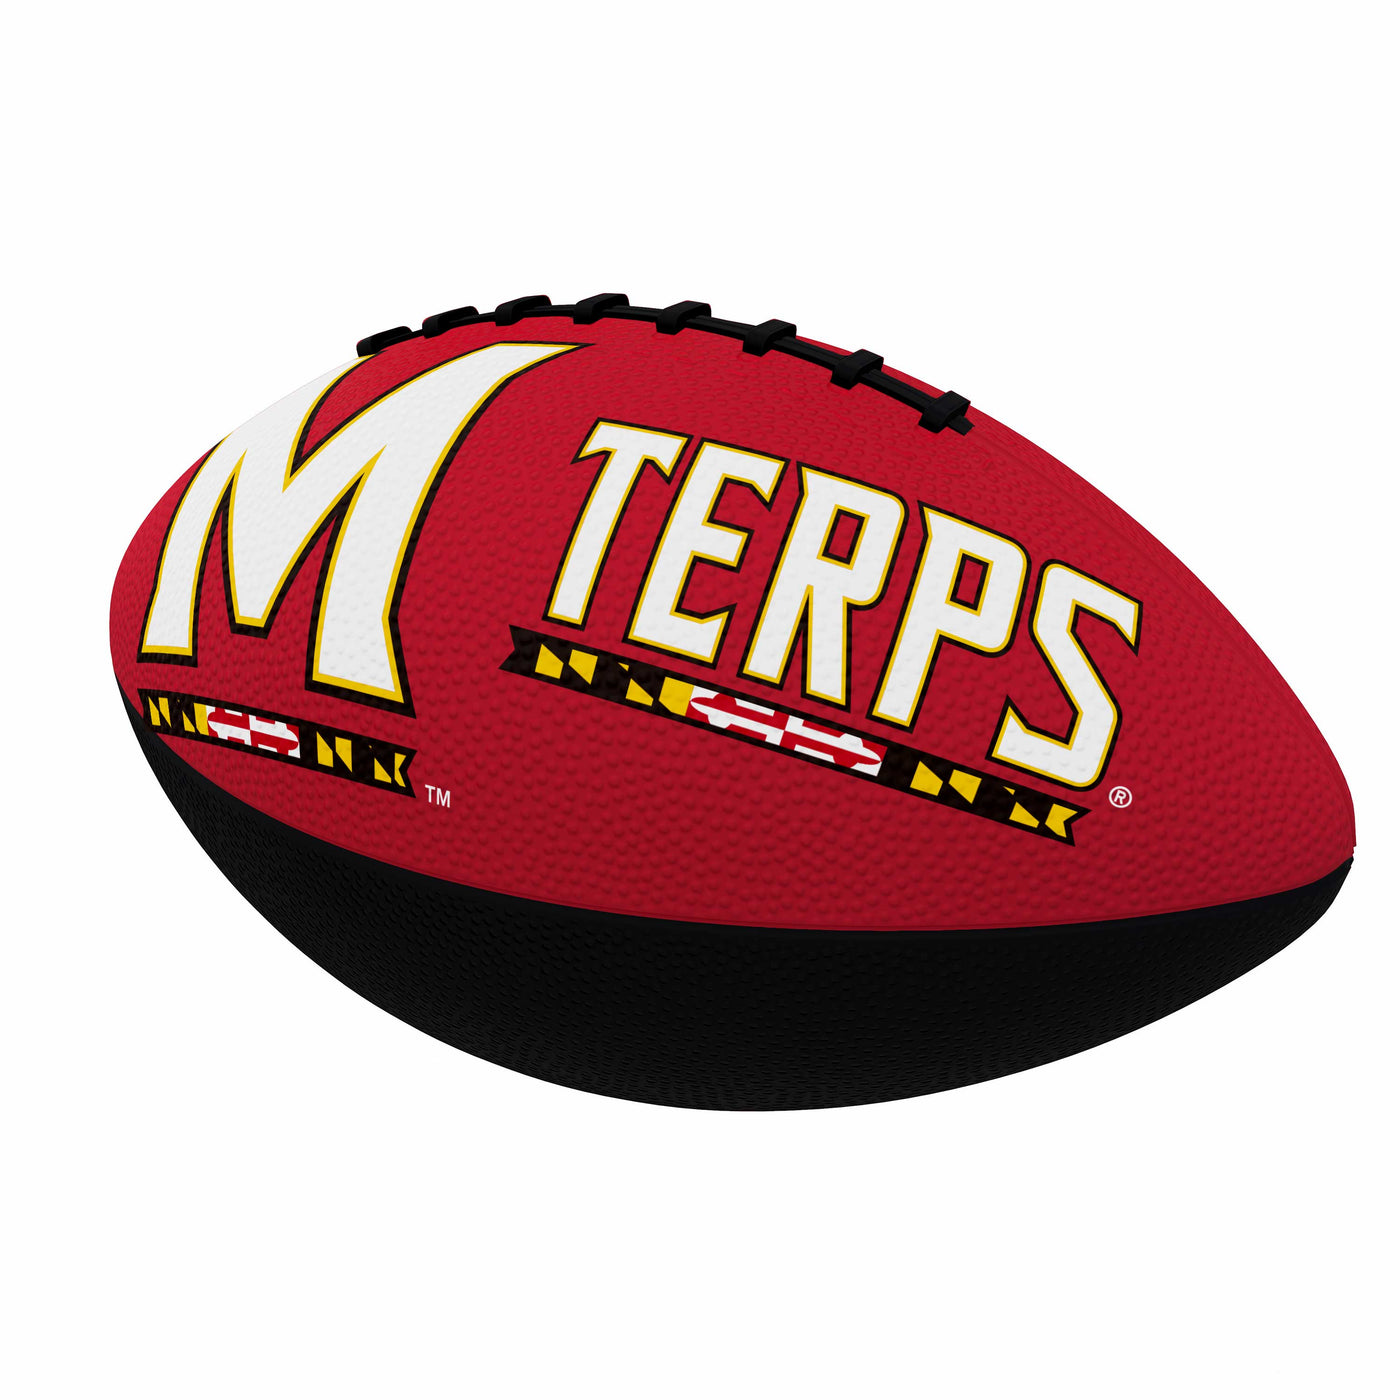 Maryland Combo Logo Junior-Size Rubber Football